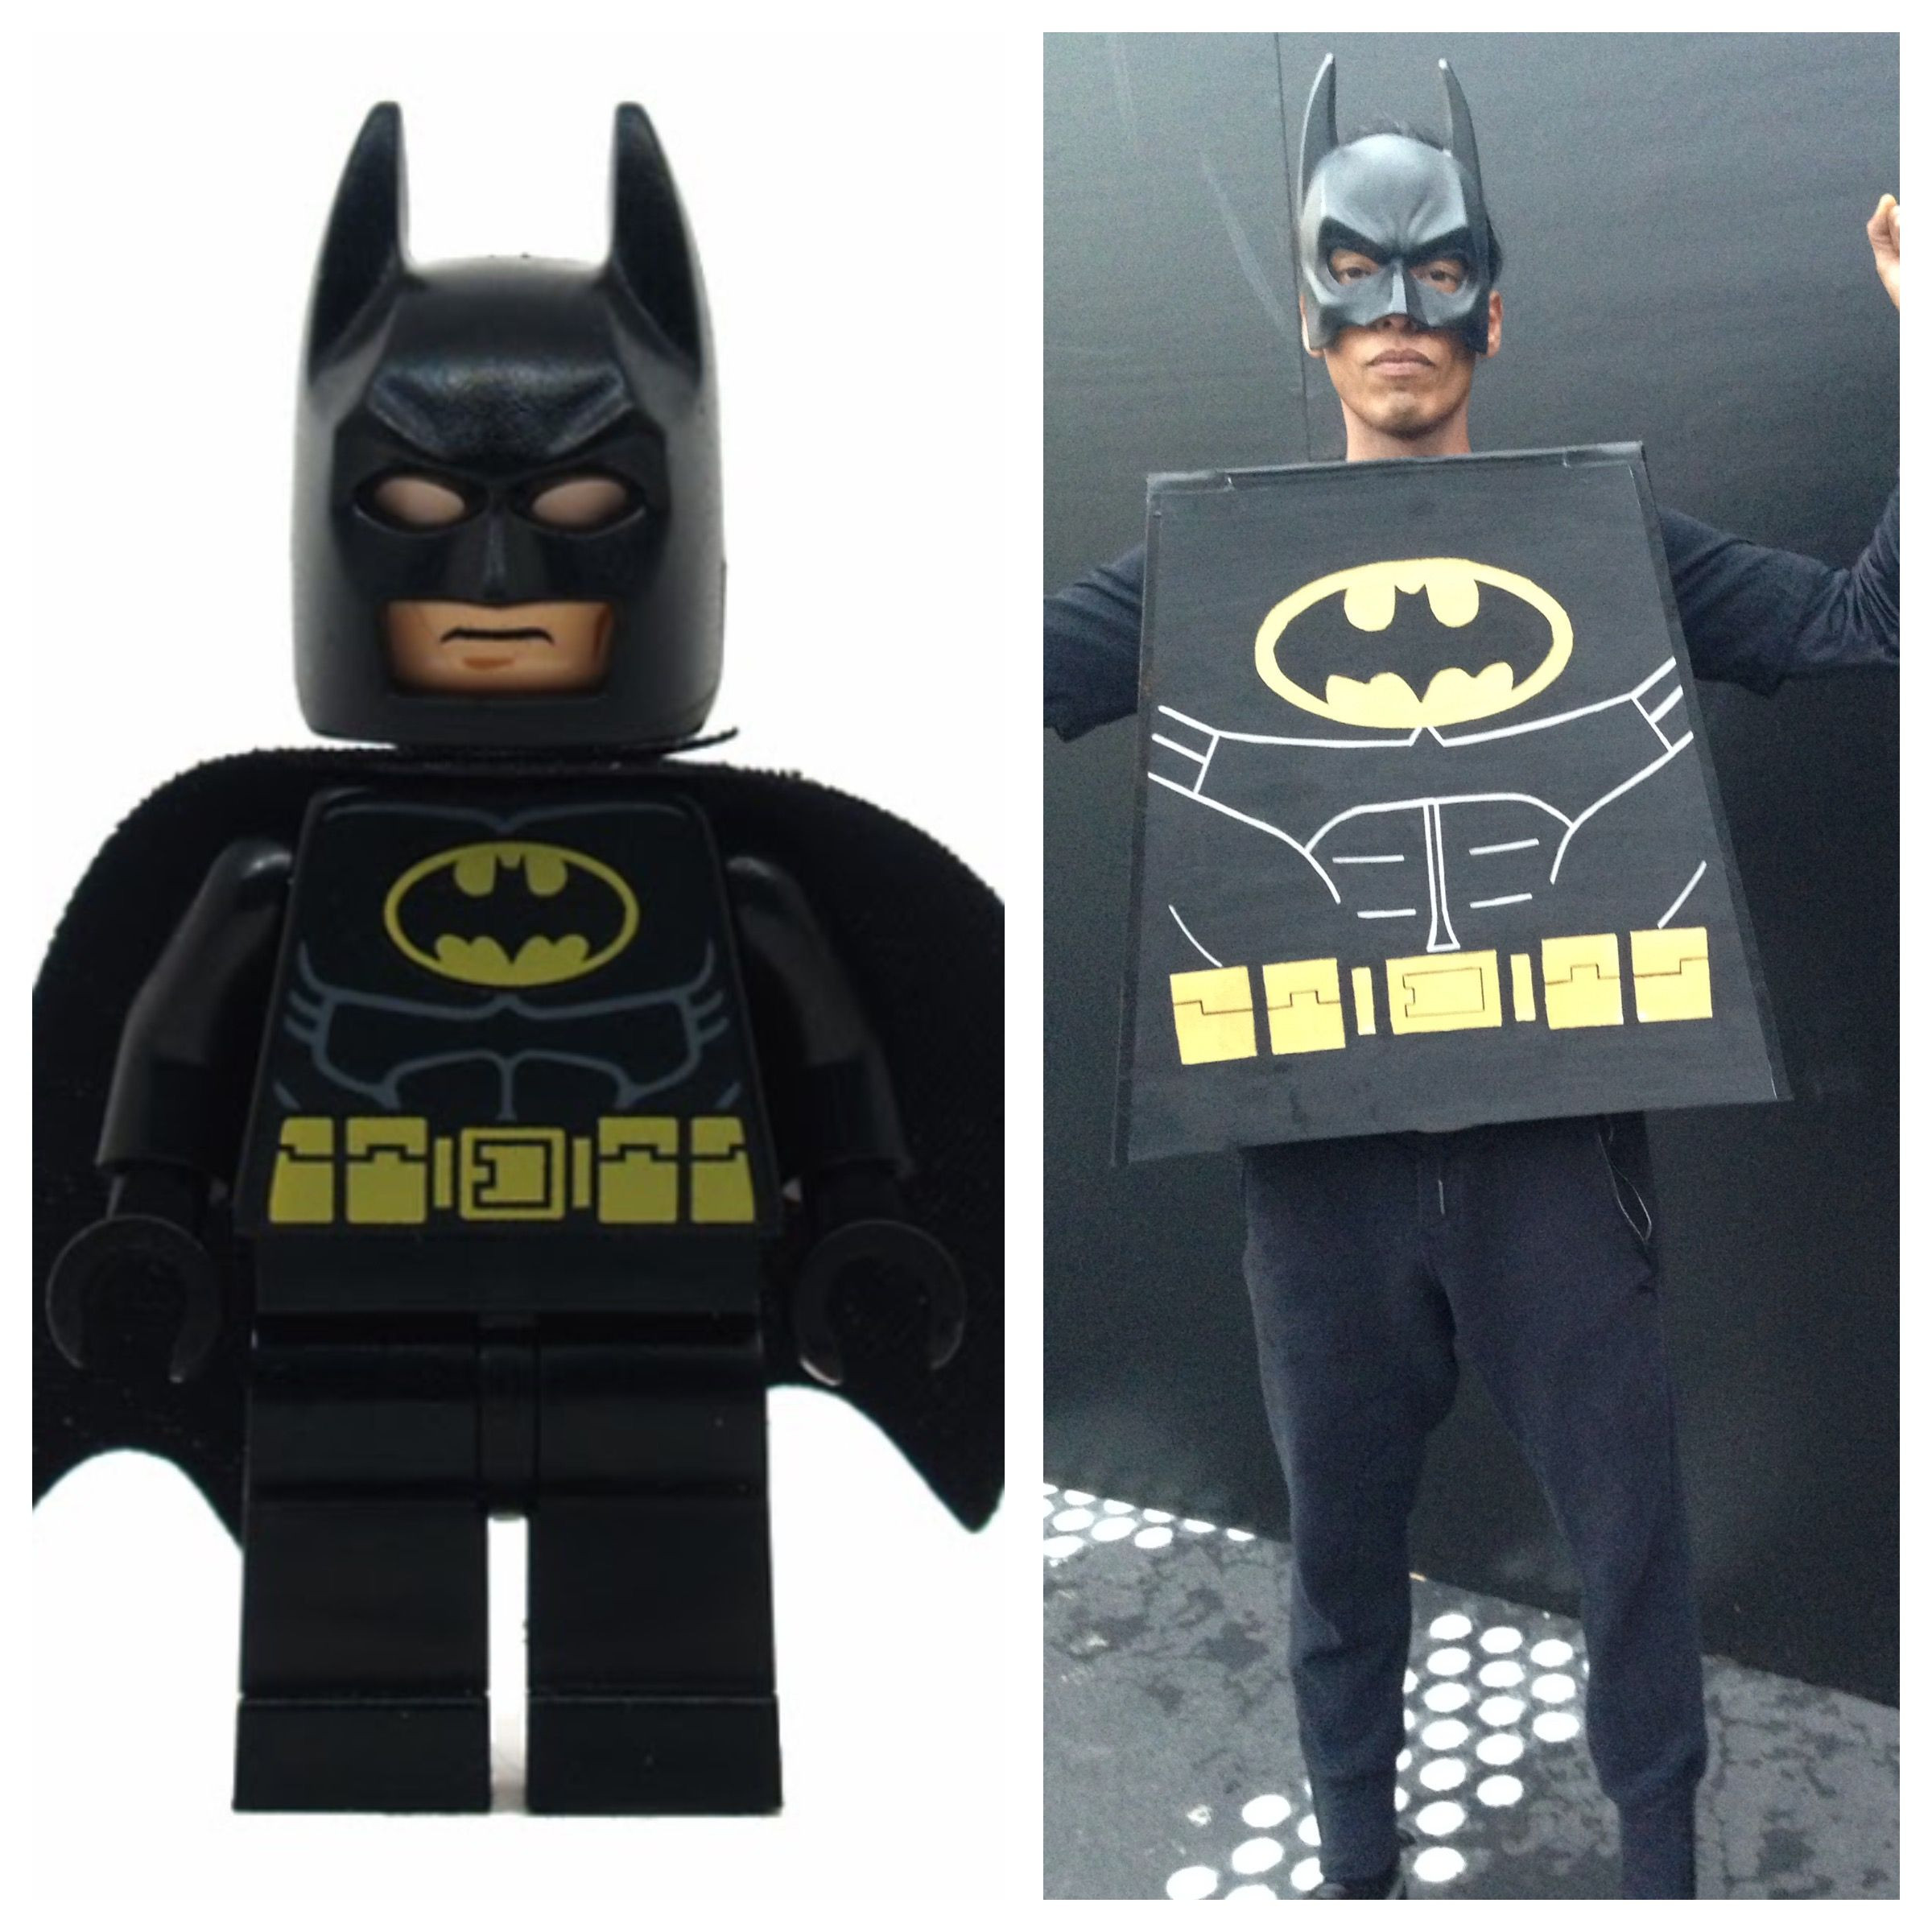 Batman DIY Costume
 Lego Batman Costume DIY With images